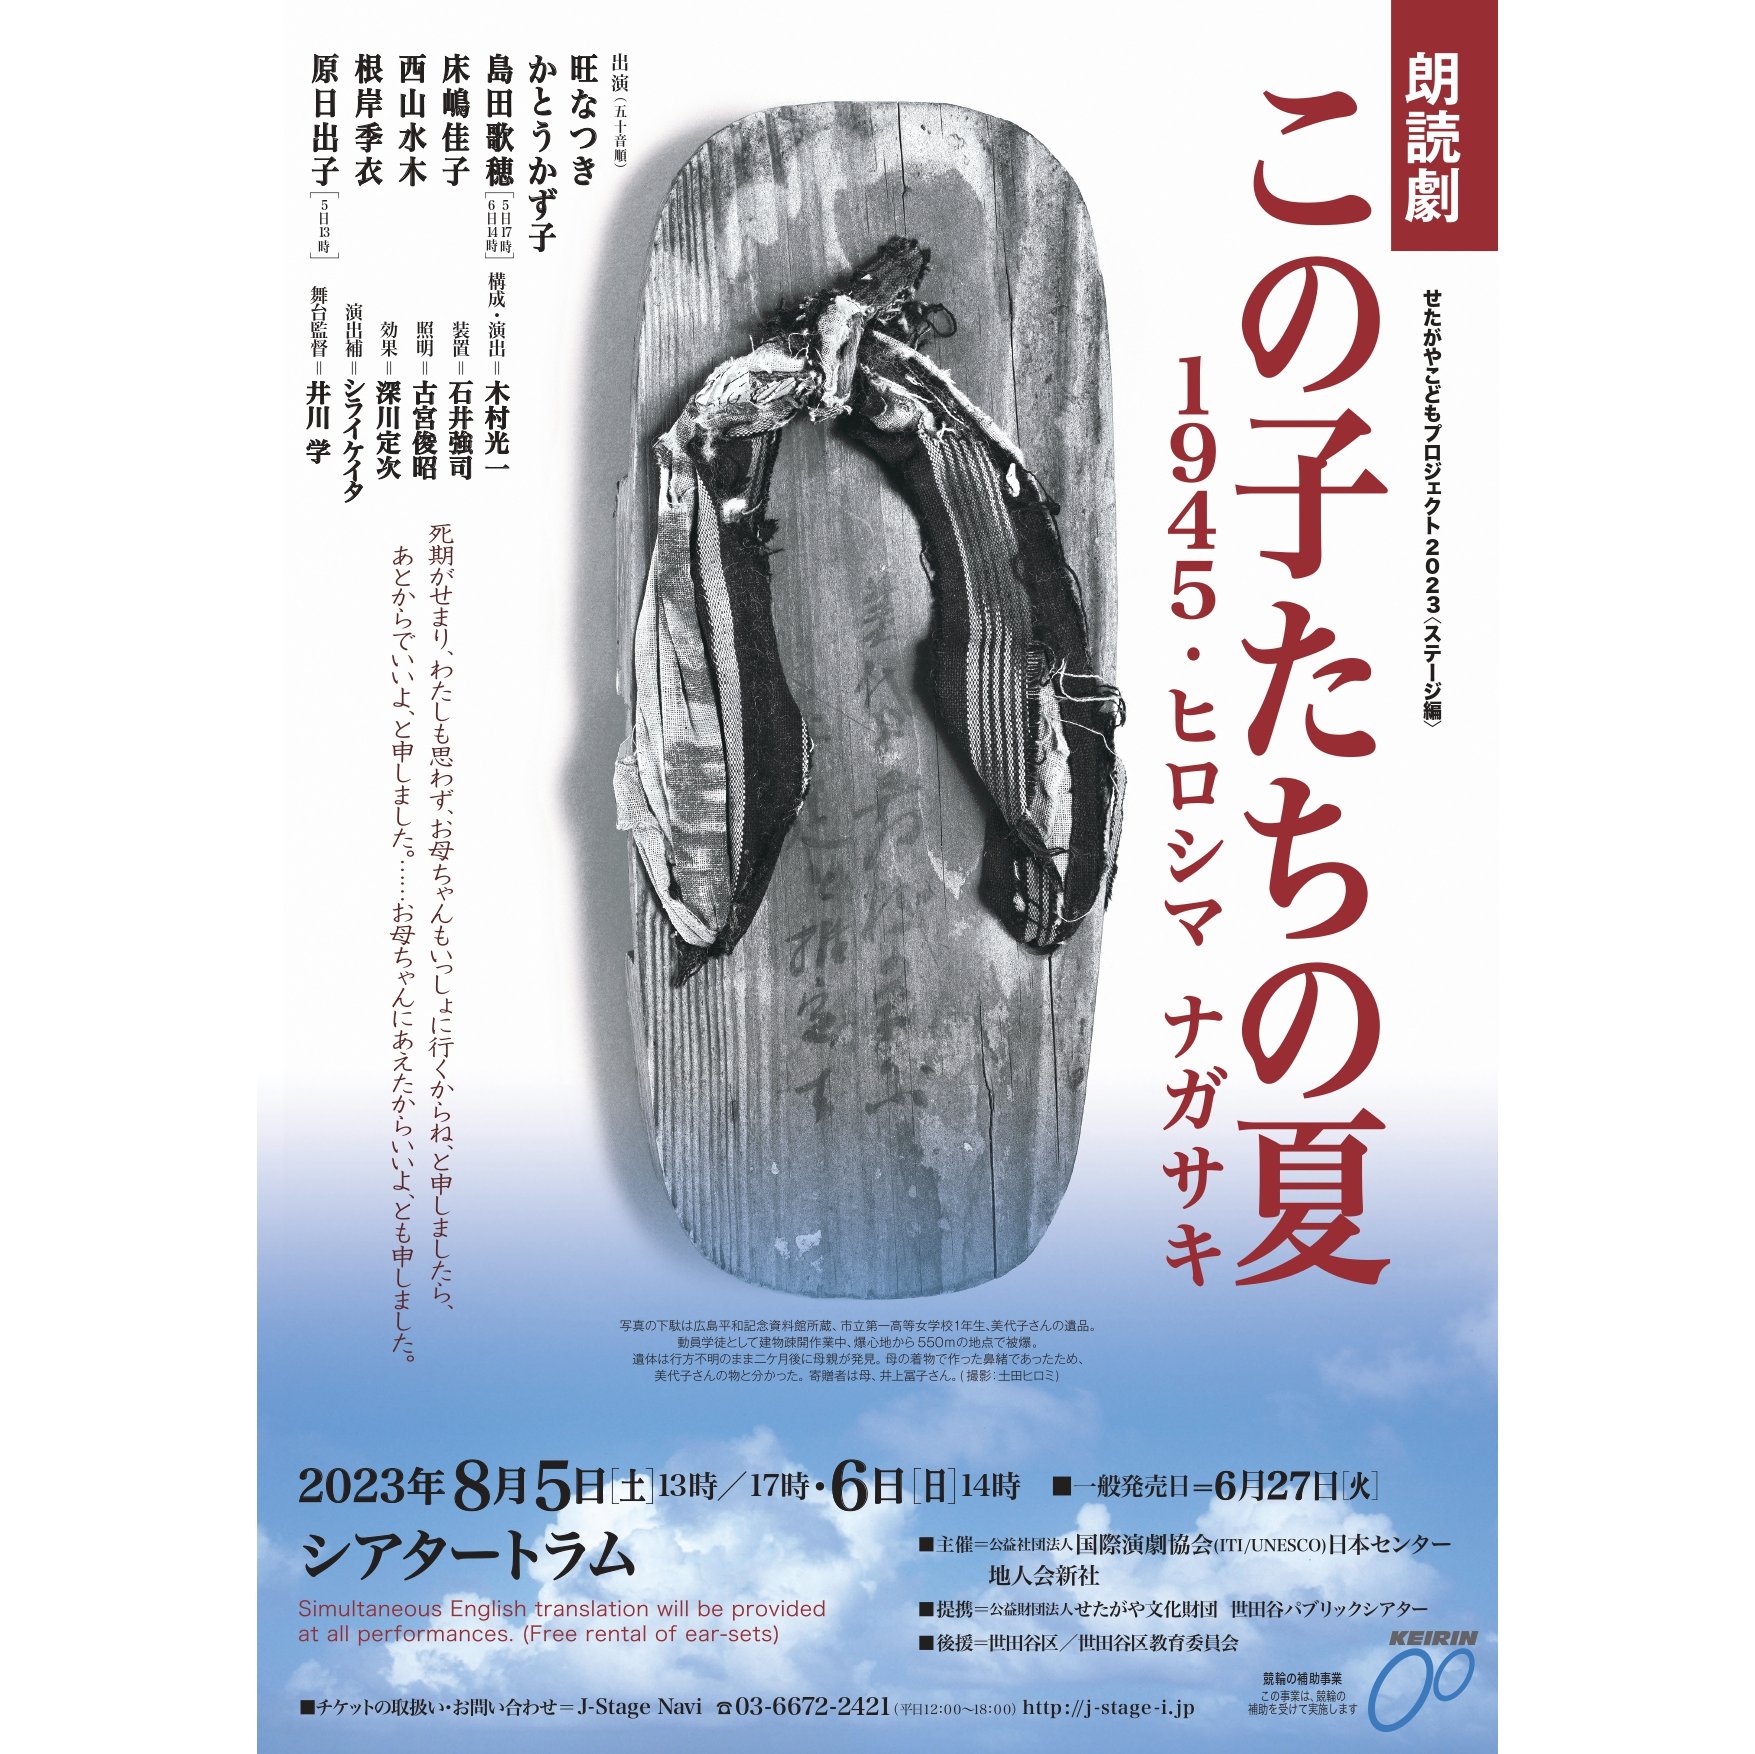 Recital drama "The summer of these children" 1945 Hiroshima Nagasaki